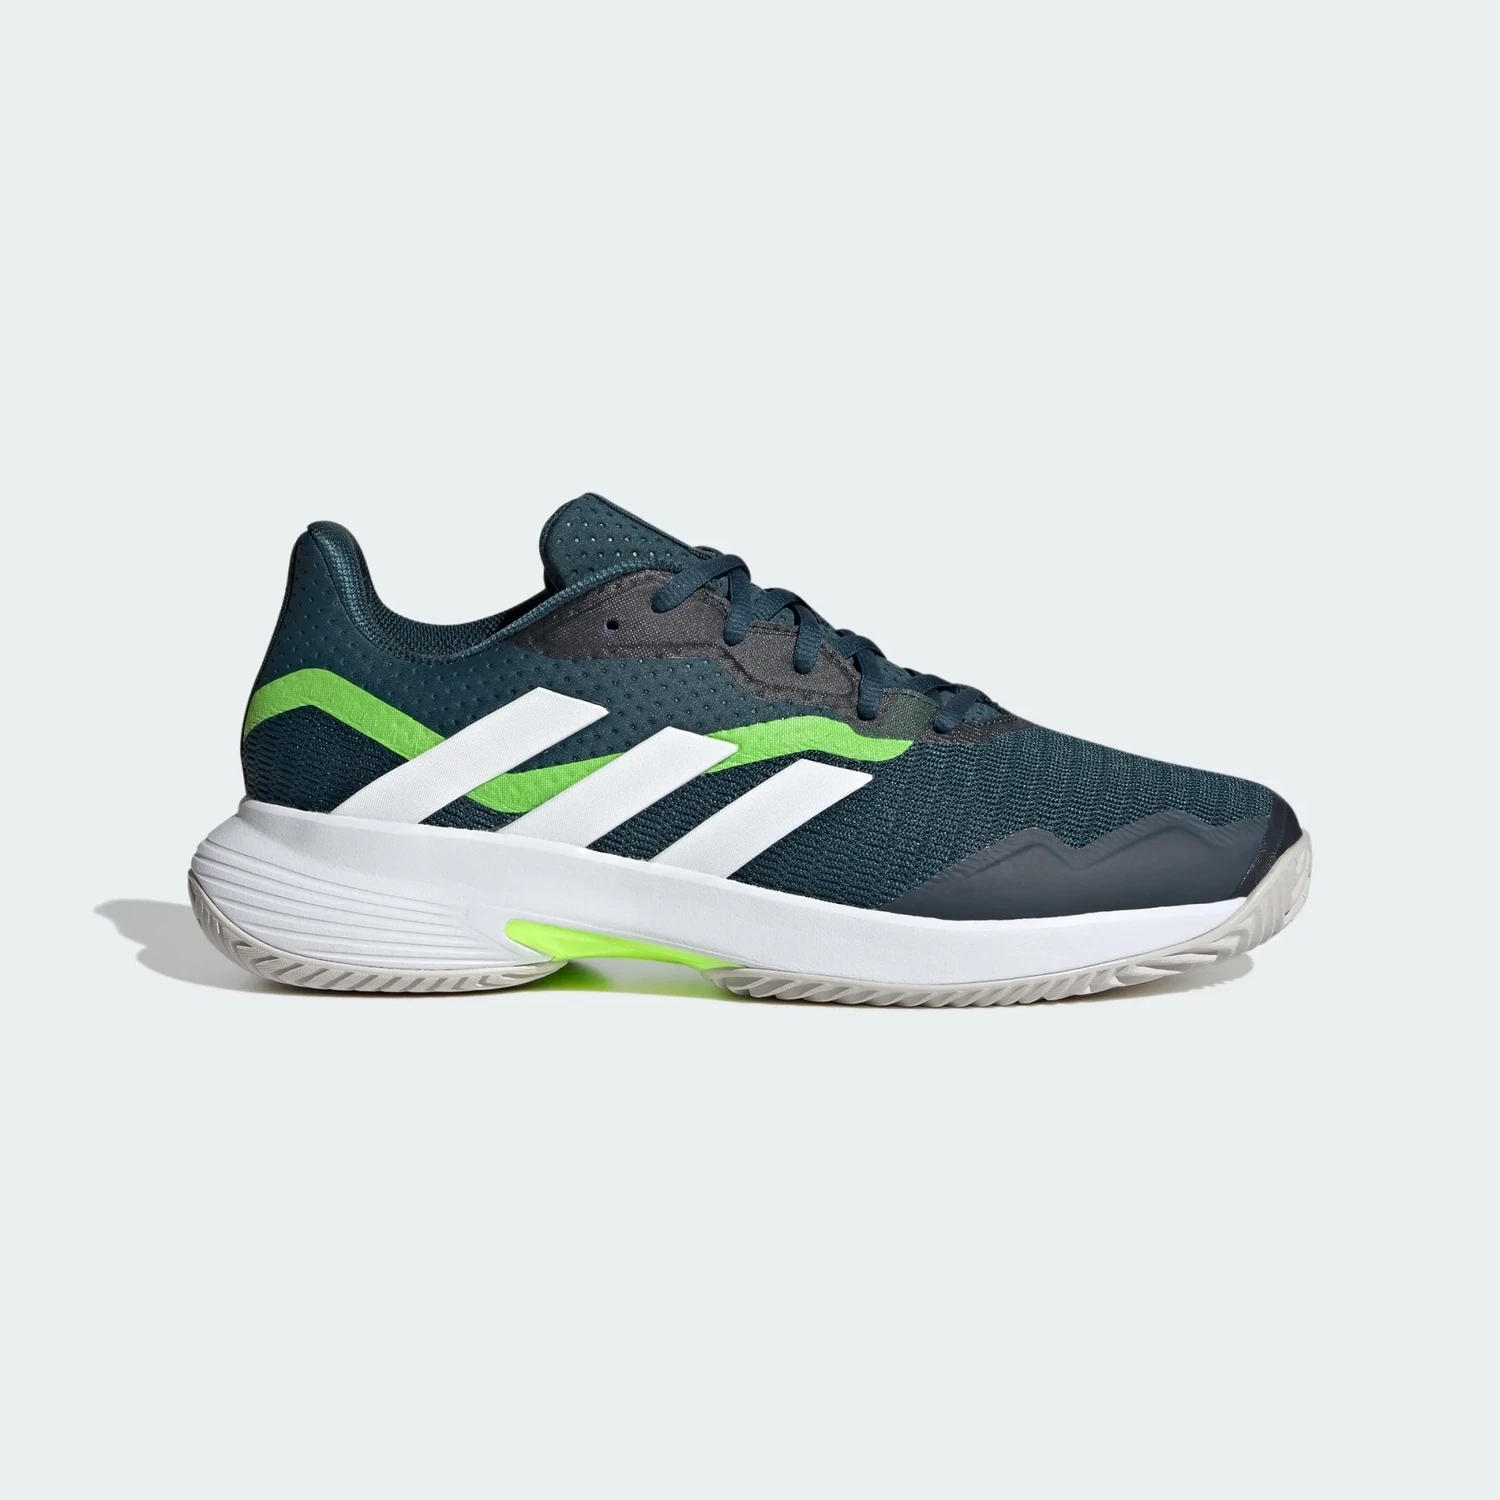 Adidas CourtJam Control Men's Tennis Shoes - Green